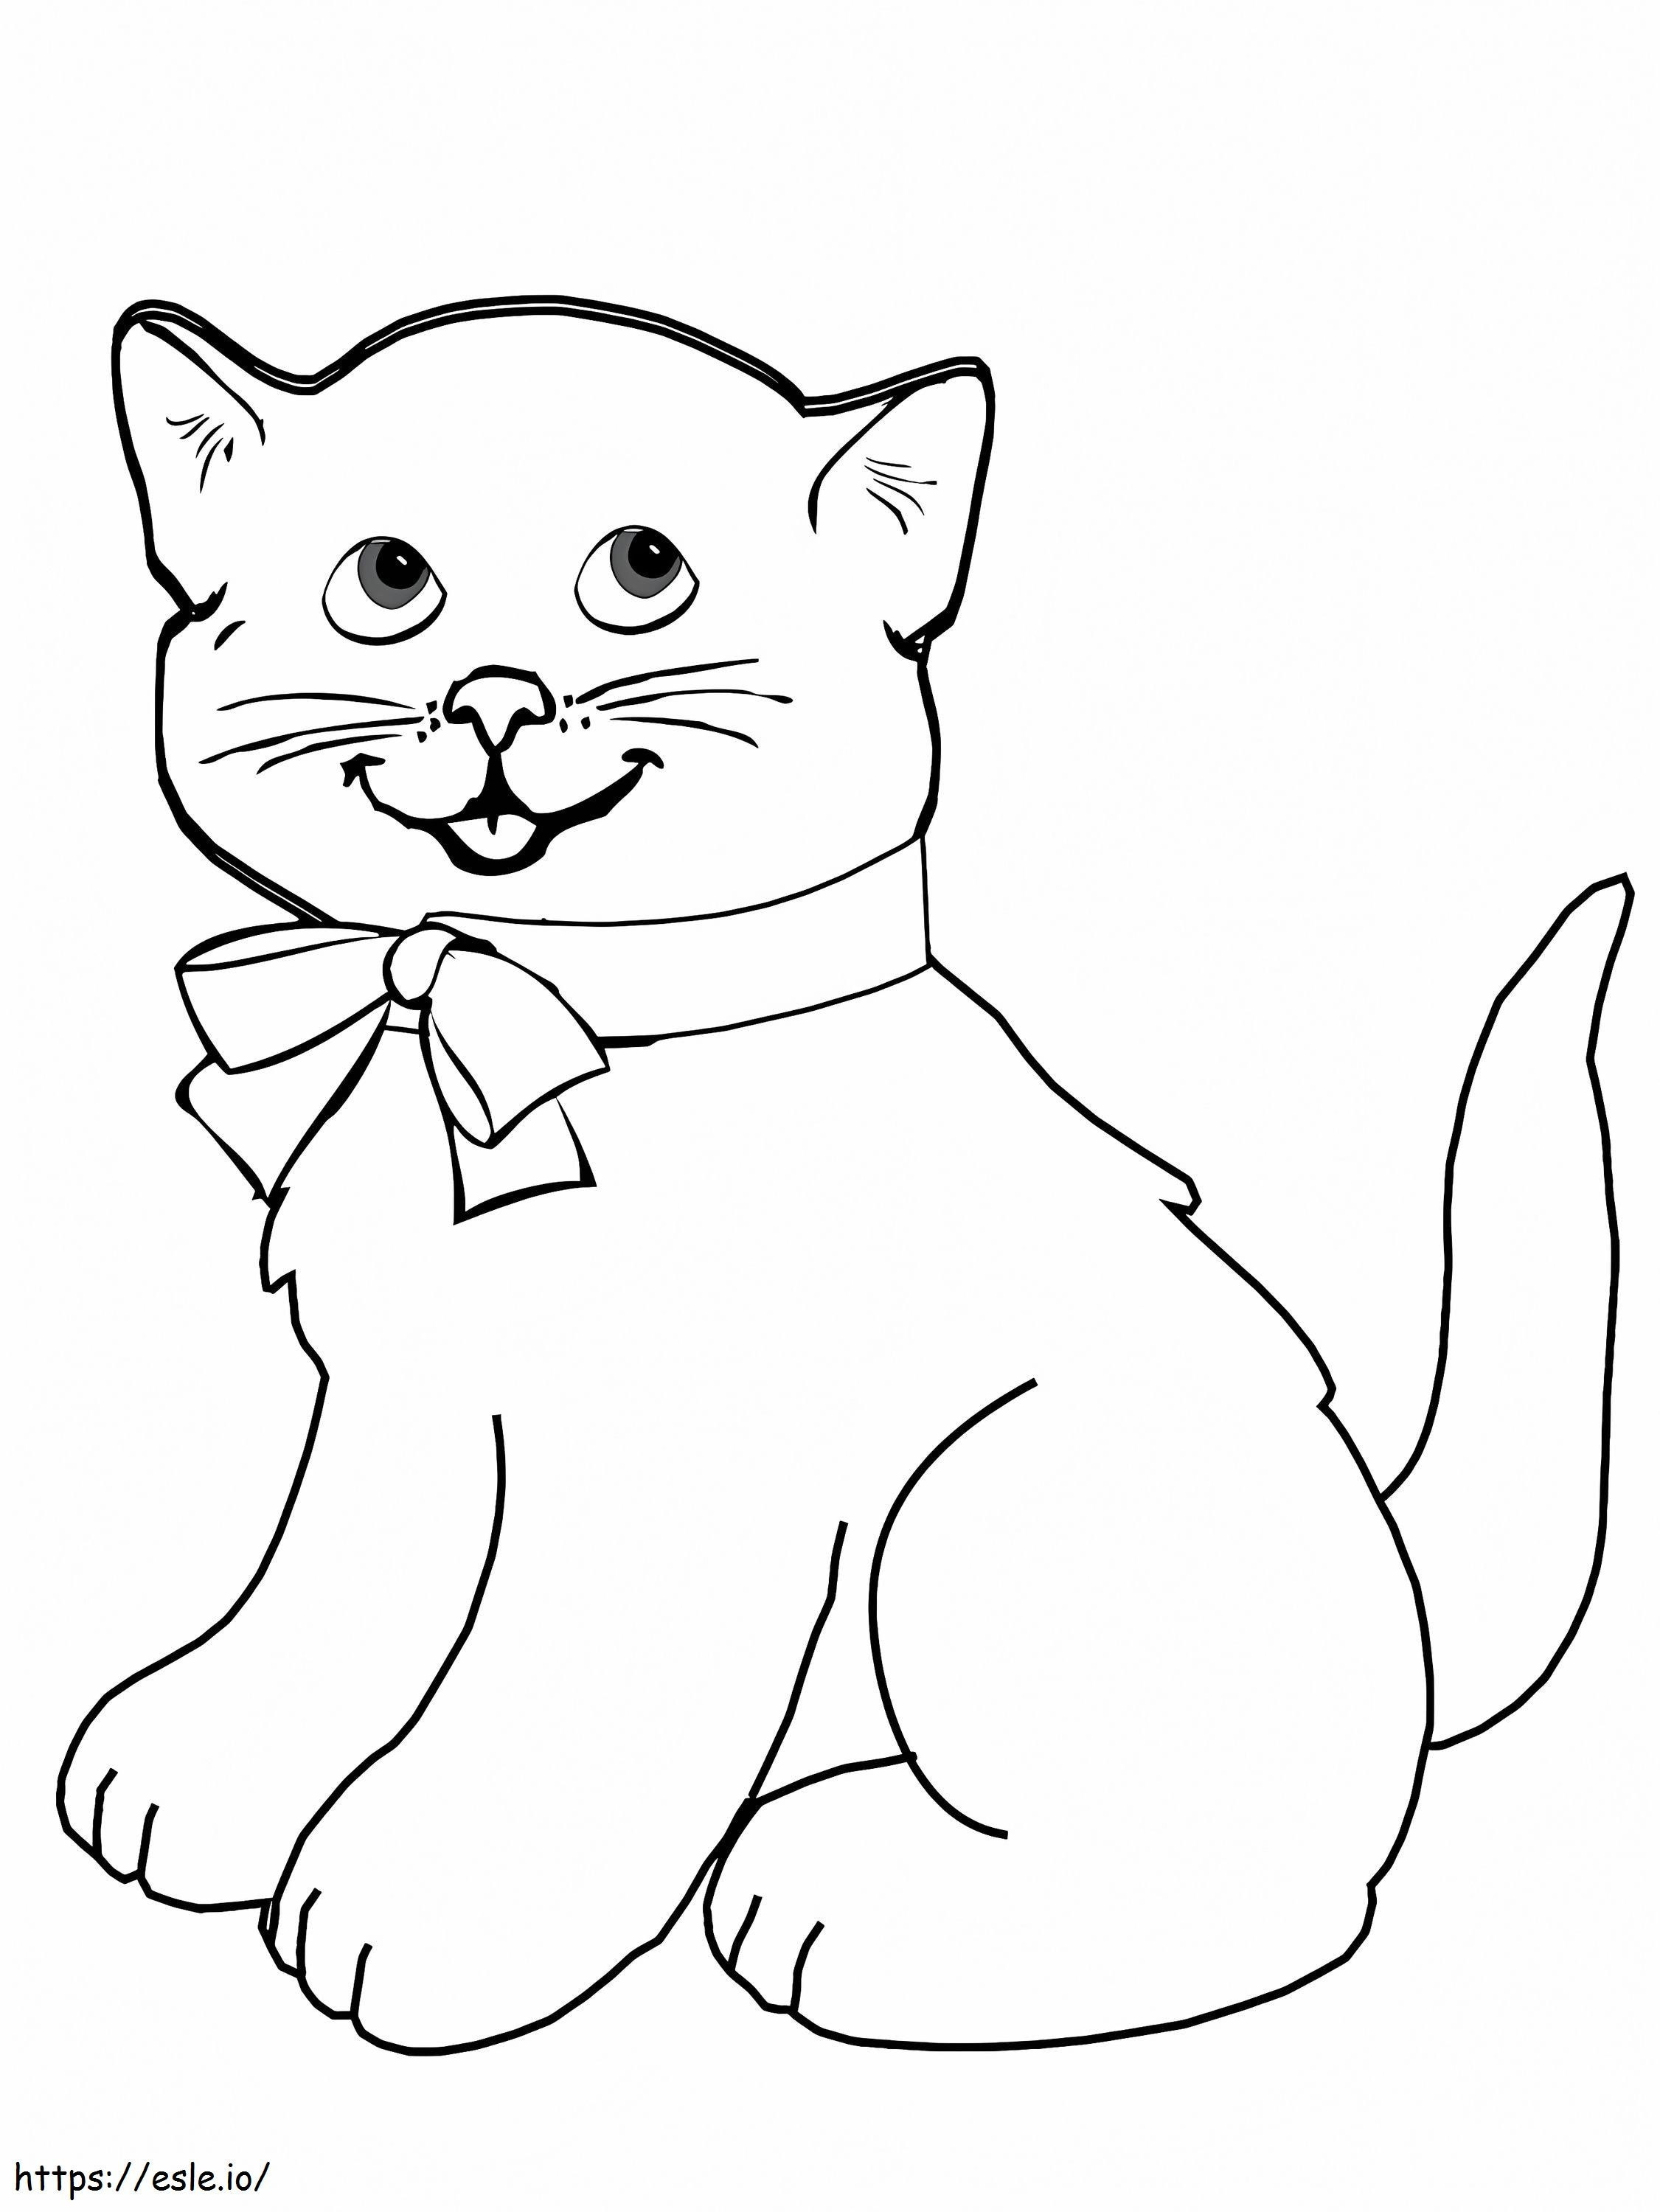 1585039959 Cartoon Kitten coloring page